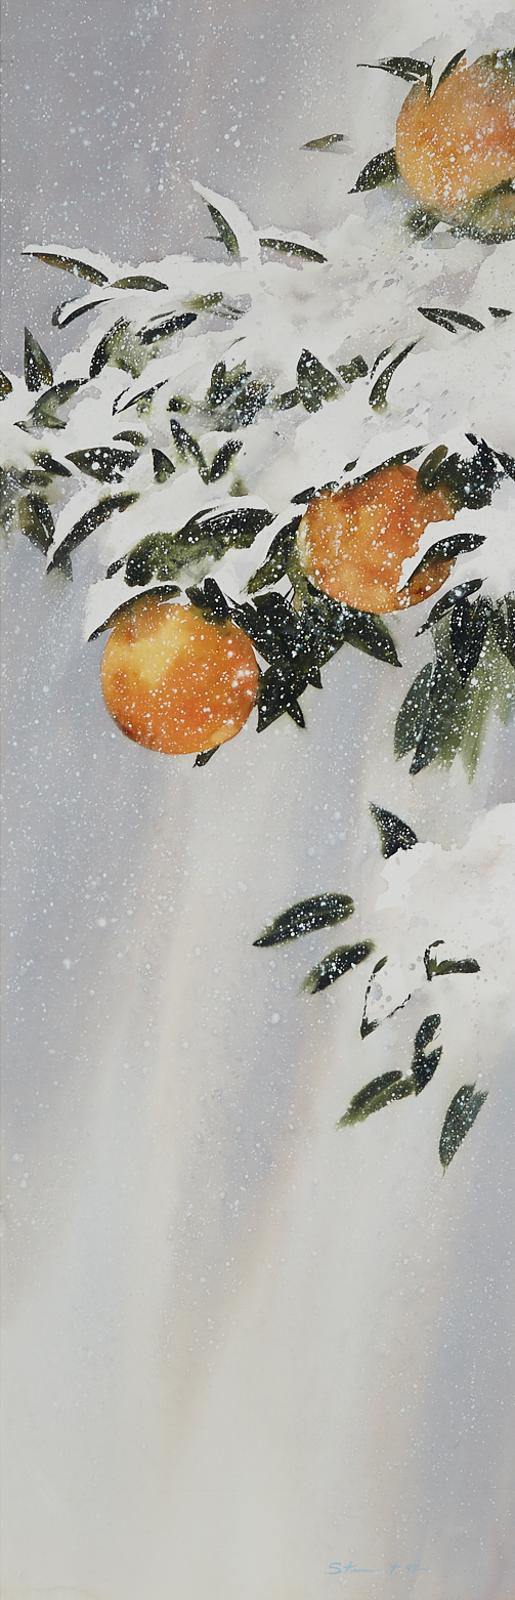 Joel Stewart (1959) - Fruit Branch Covered In Snow, 1997